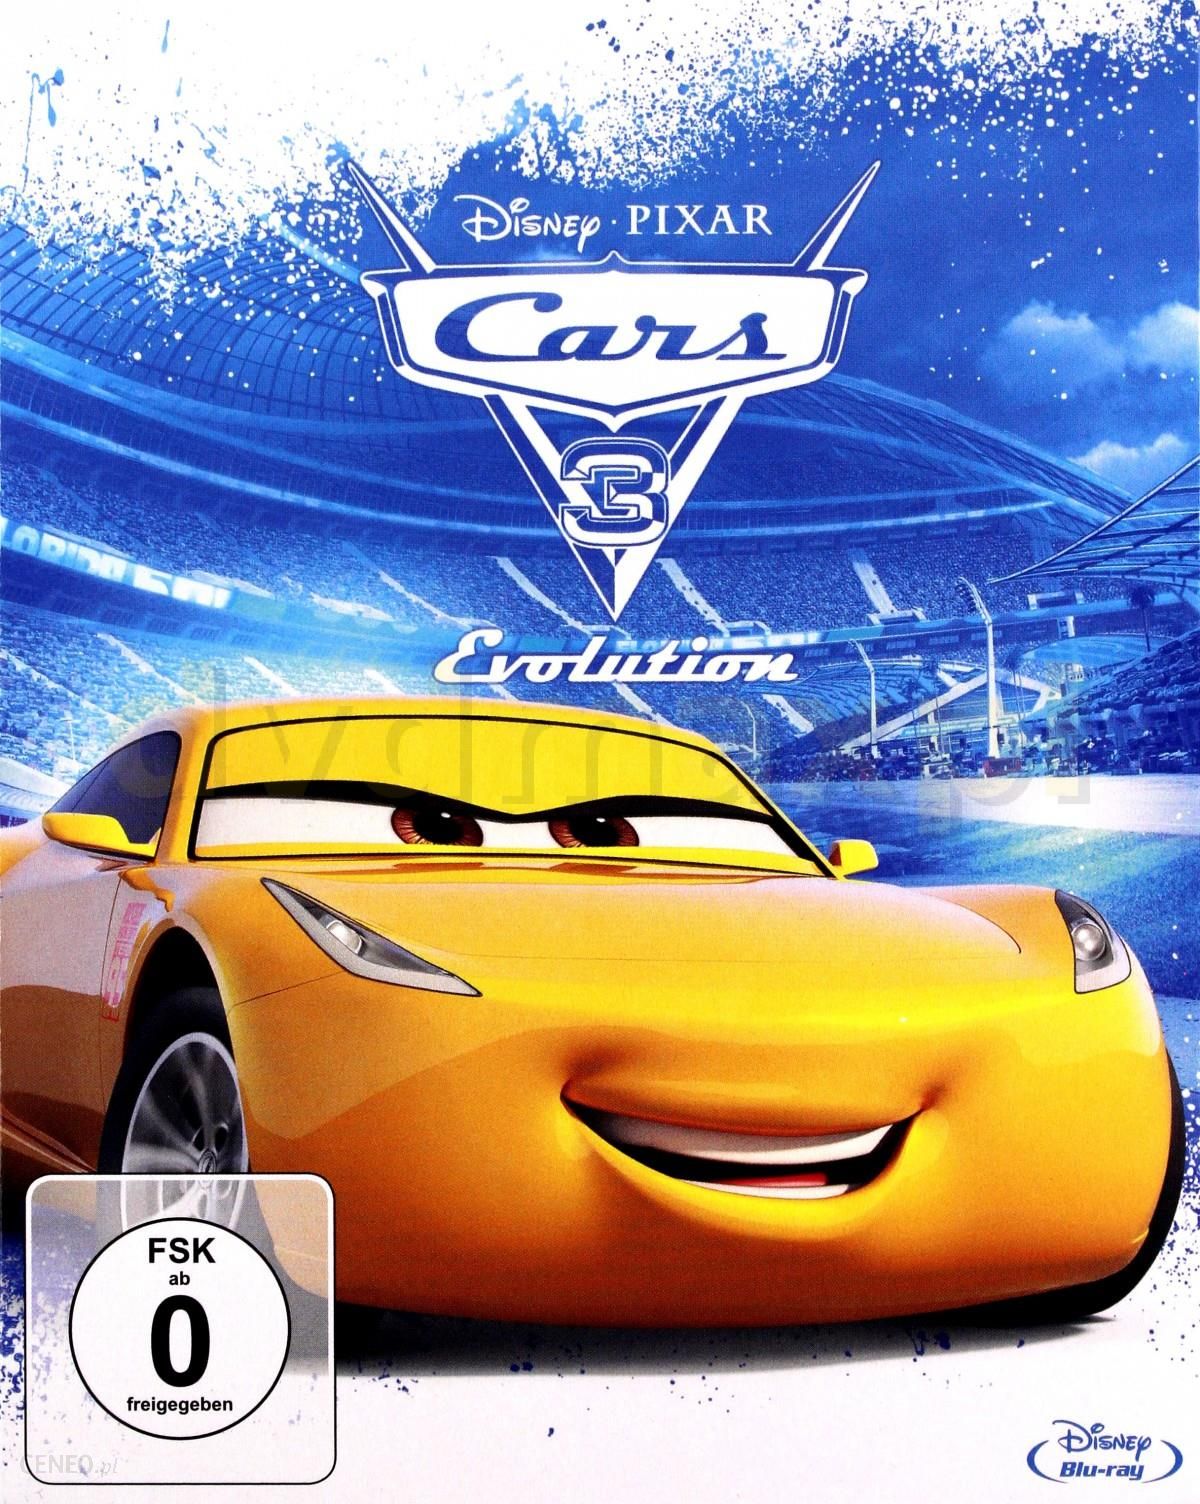 NEW Cars 3 Blu-Ray + DVD + Digital Disney Pixar movie